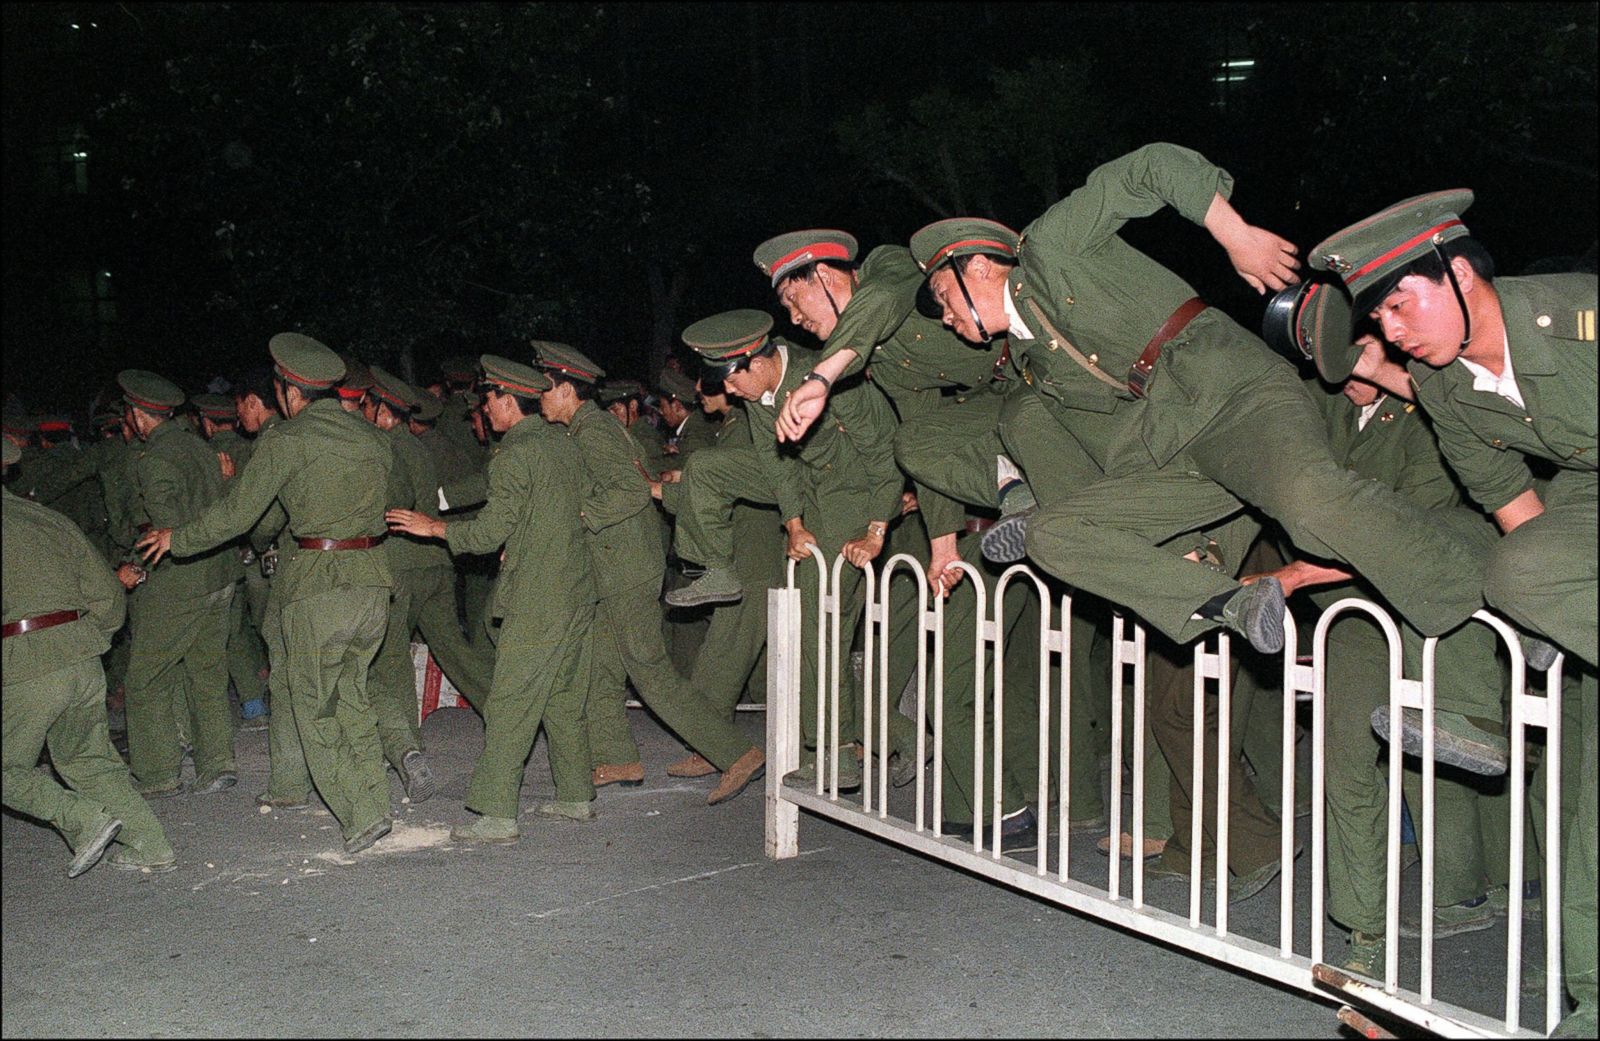 http://a.abcnews.com/images/International/GTY_Tiananmen_Square_7mar_140602_20x13_1600.jpg